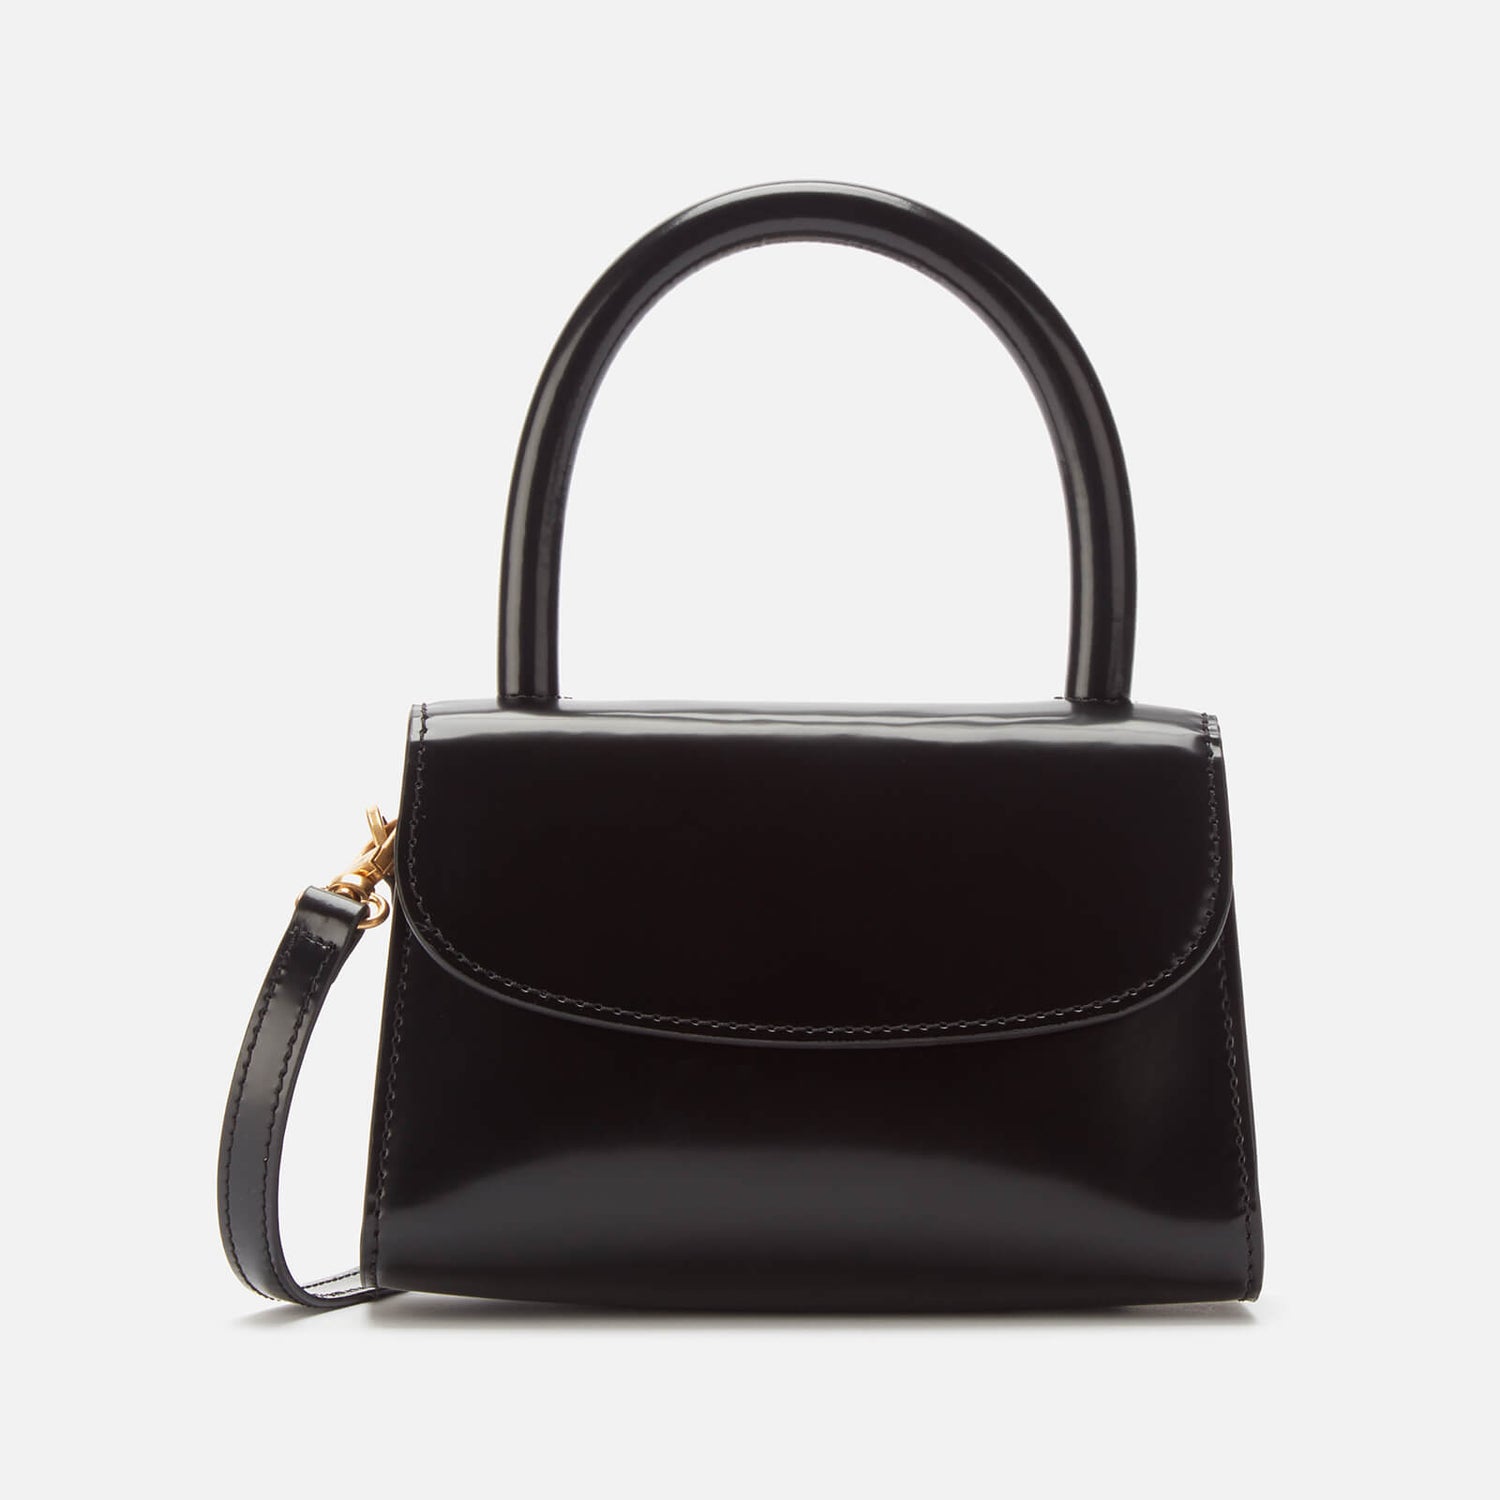 by FAR Women's Mini Semi Patent Leather Tote Bag - Black